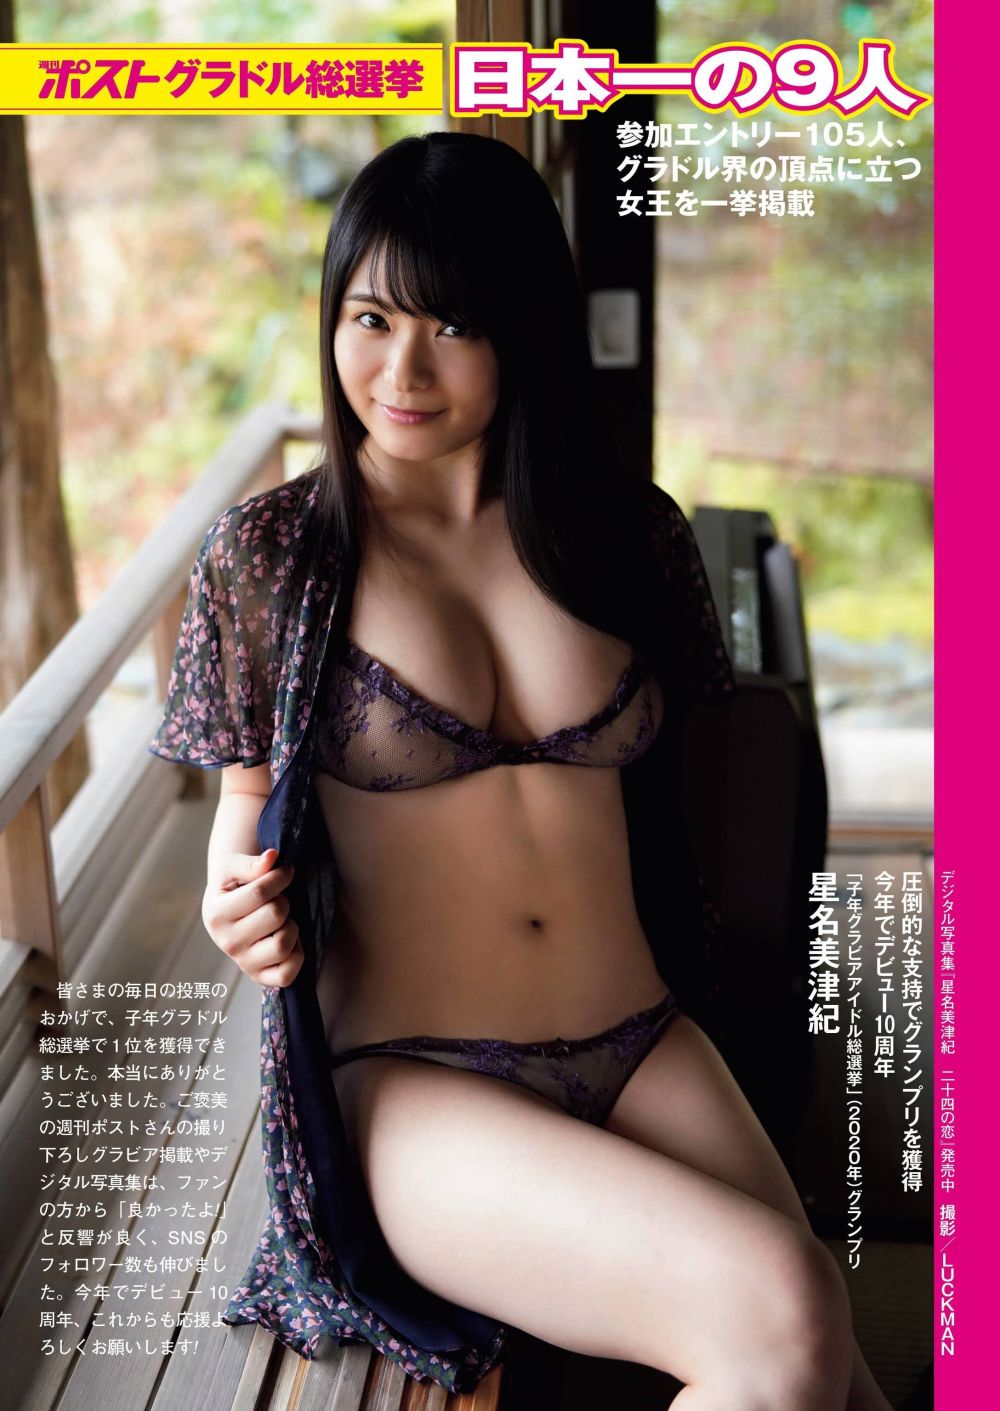 Mizuki Hoshina Sexy and Hottest Photos , Latest Pics